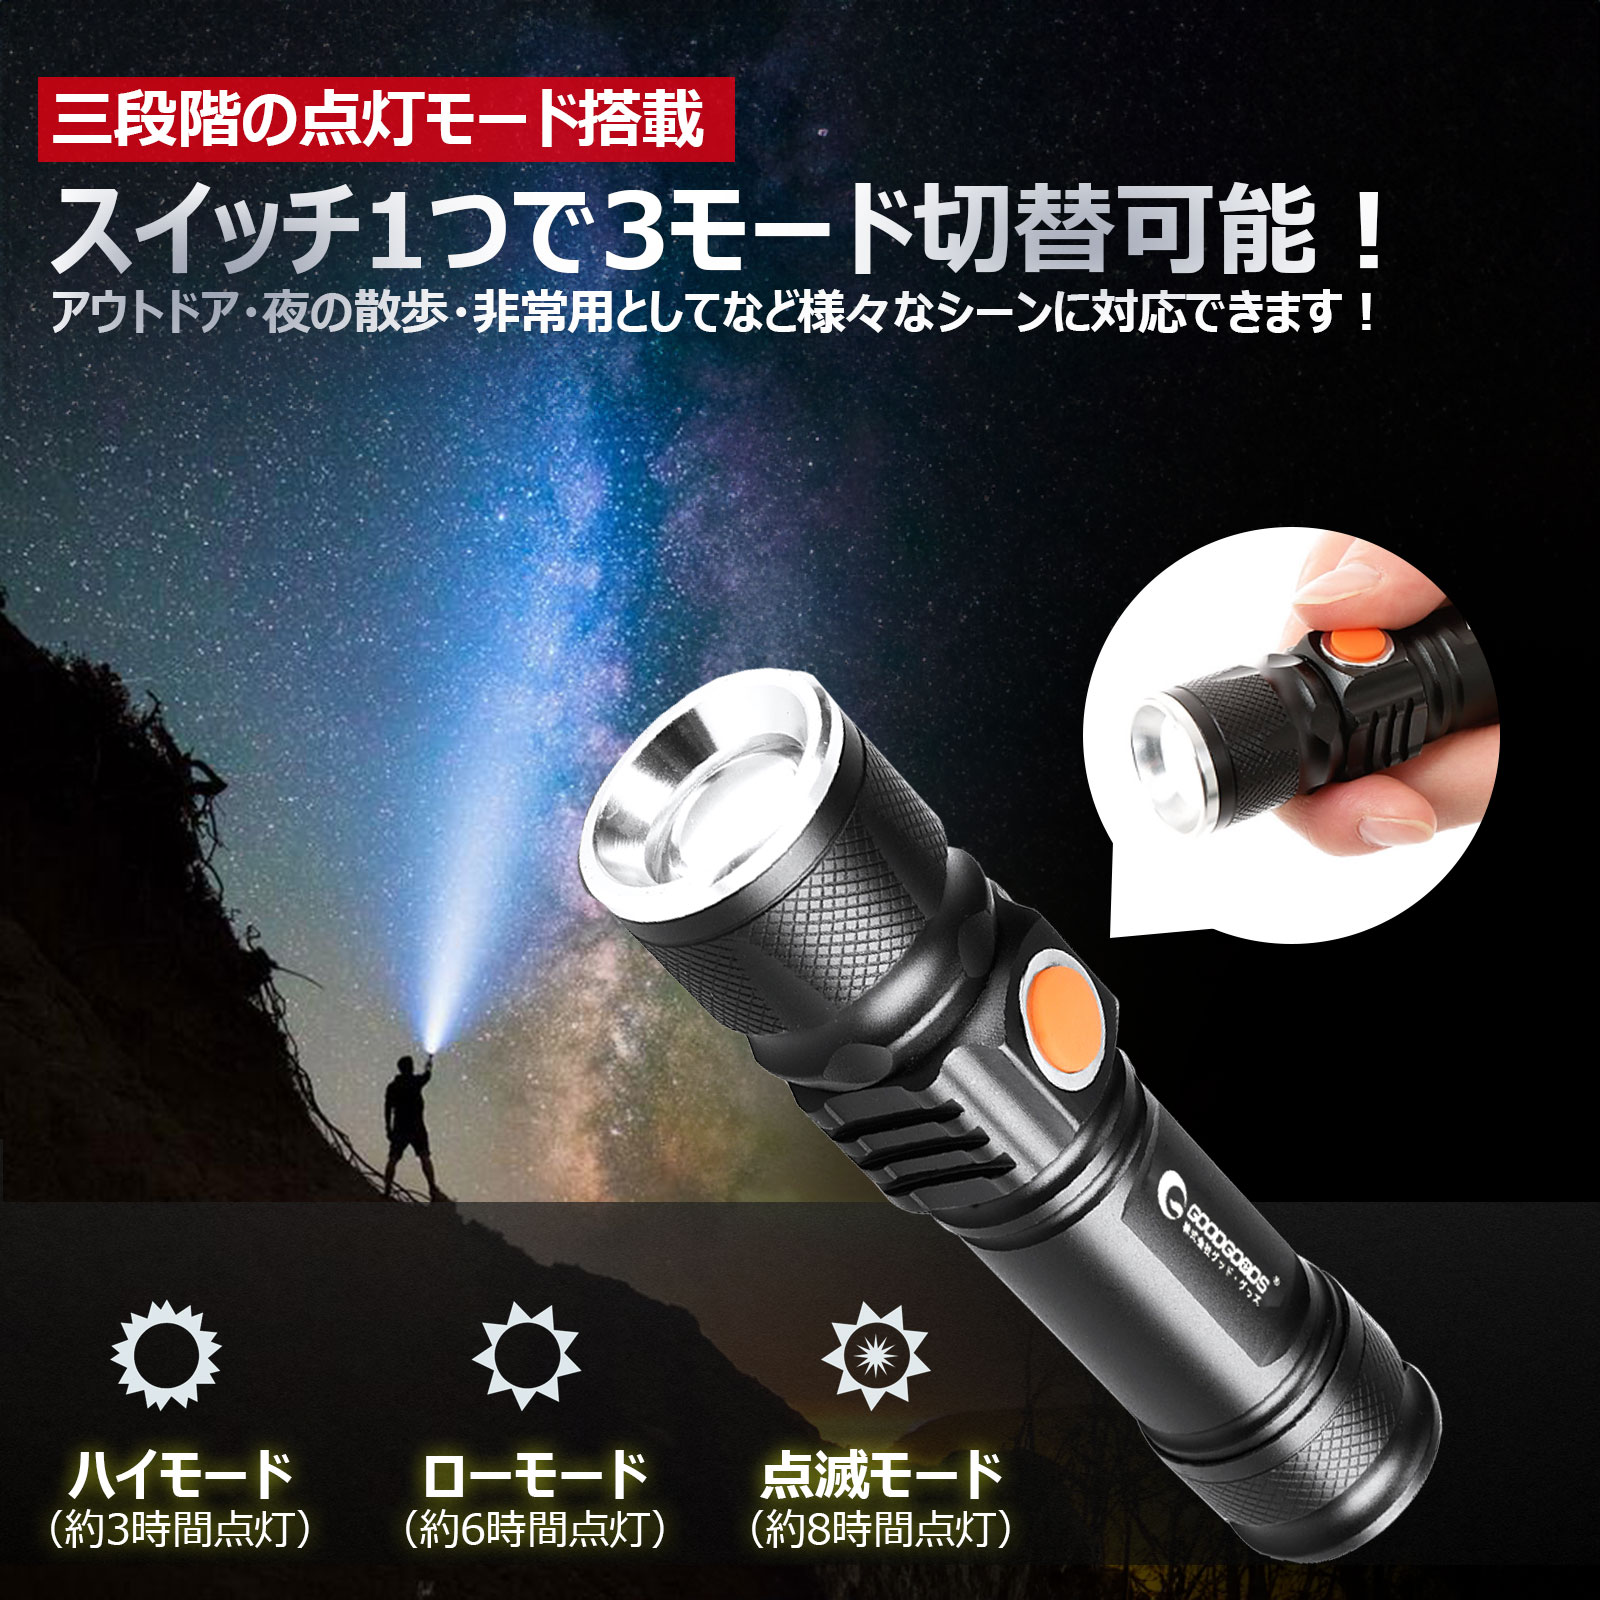 USB充電式 LED懐中電灯 小型 CREE XML-T6 強力 軍用 ハンディライト 軽量 ズーム機能付 防水 3モード